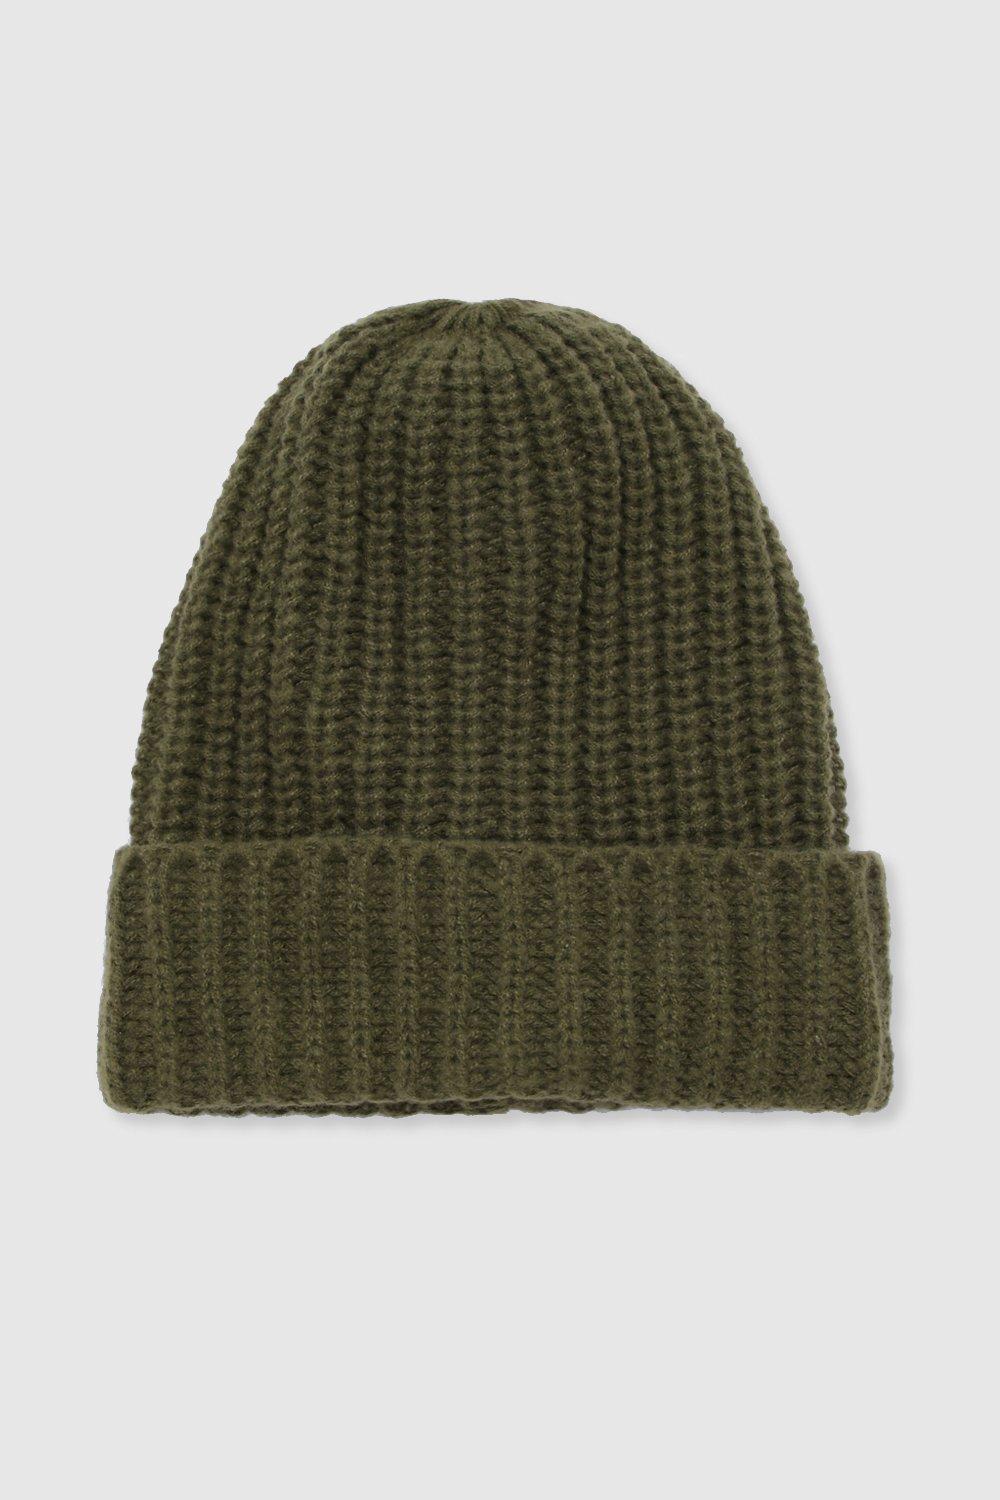 Icebox Dohm 606-29 Otto Winter Hat Leather, Medium-Large